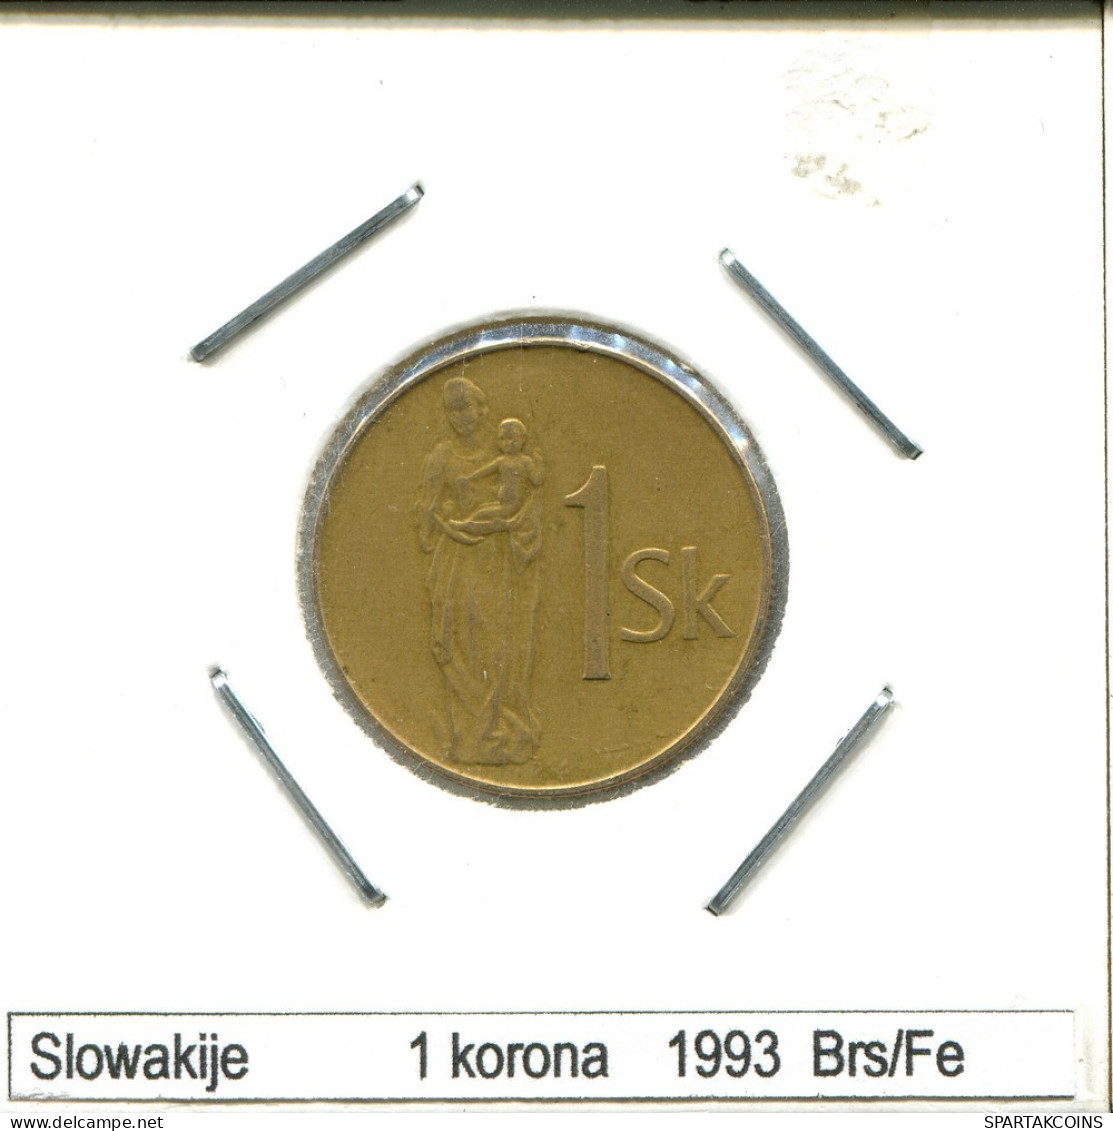 1 KORUN 1993 SLOWAKEI SLOVAKIA Münze #AS566.D.A - Slovakia